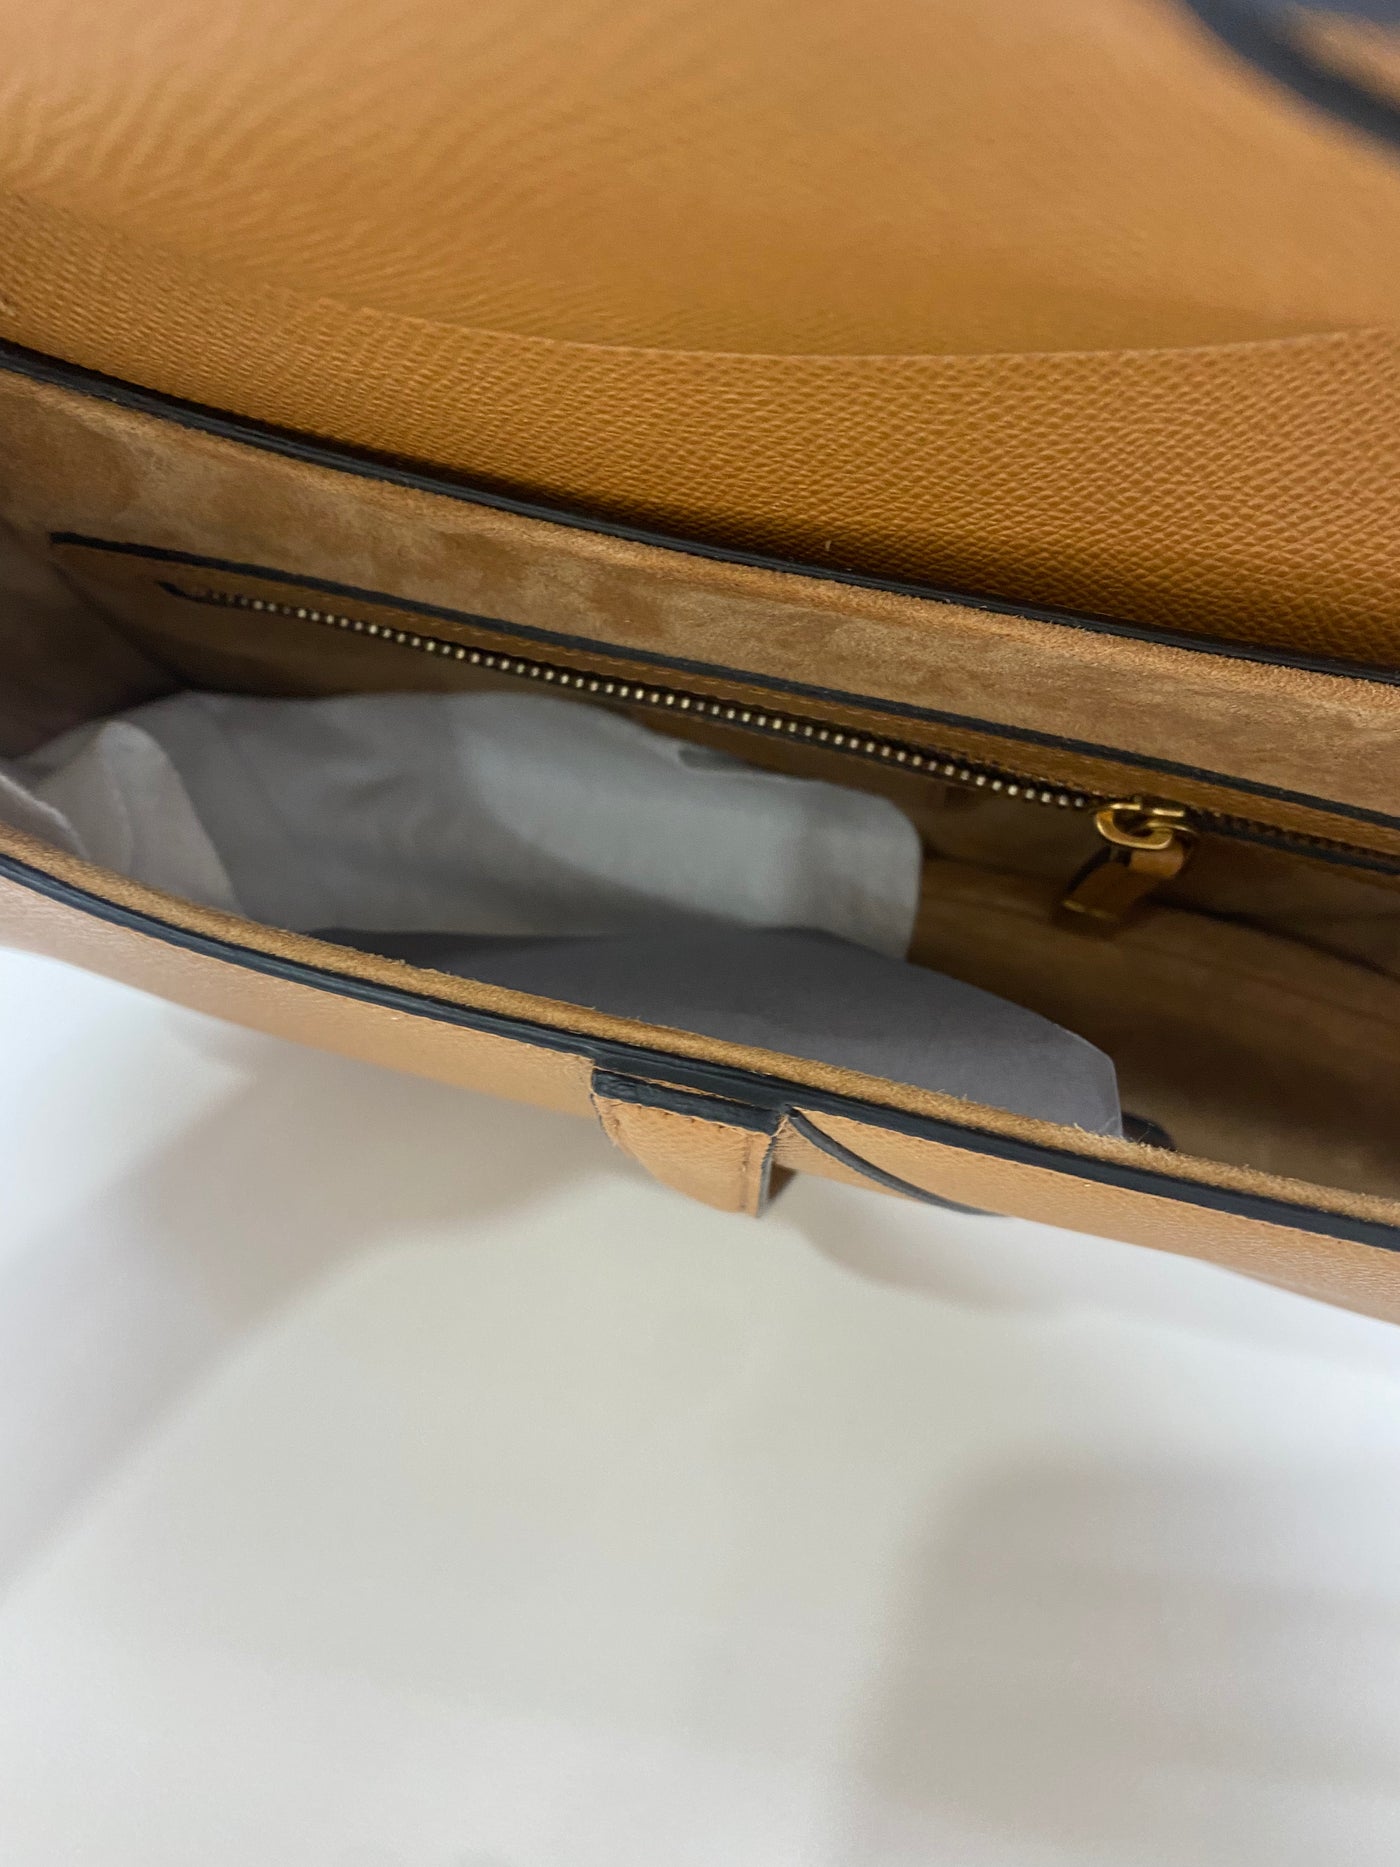 Dior Saddle Bag Tan Leather